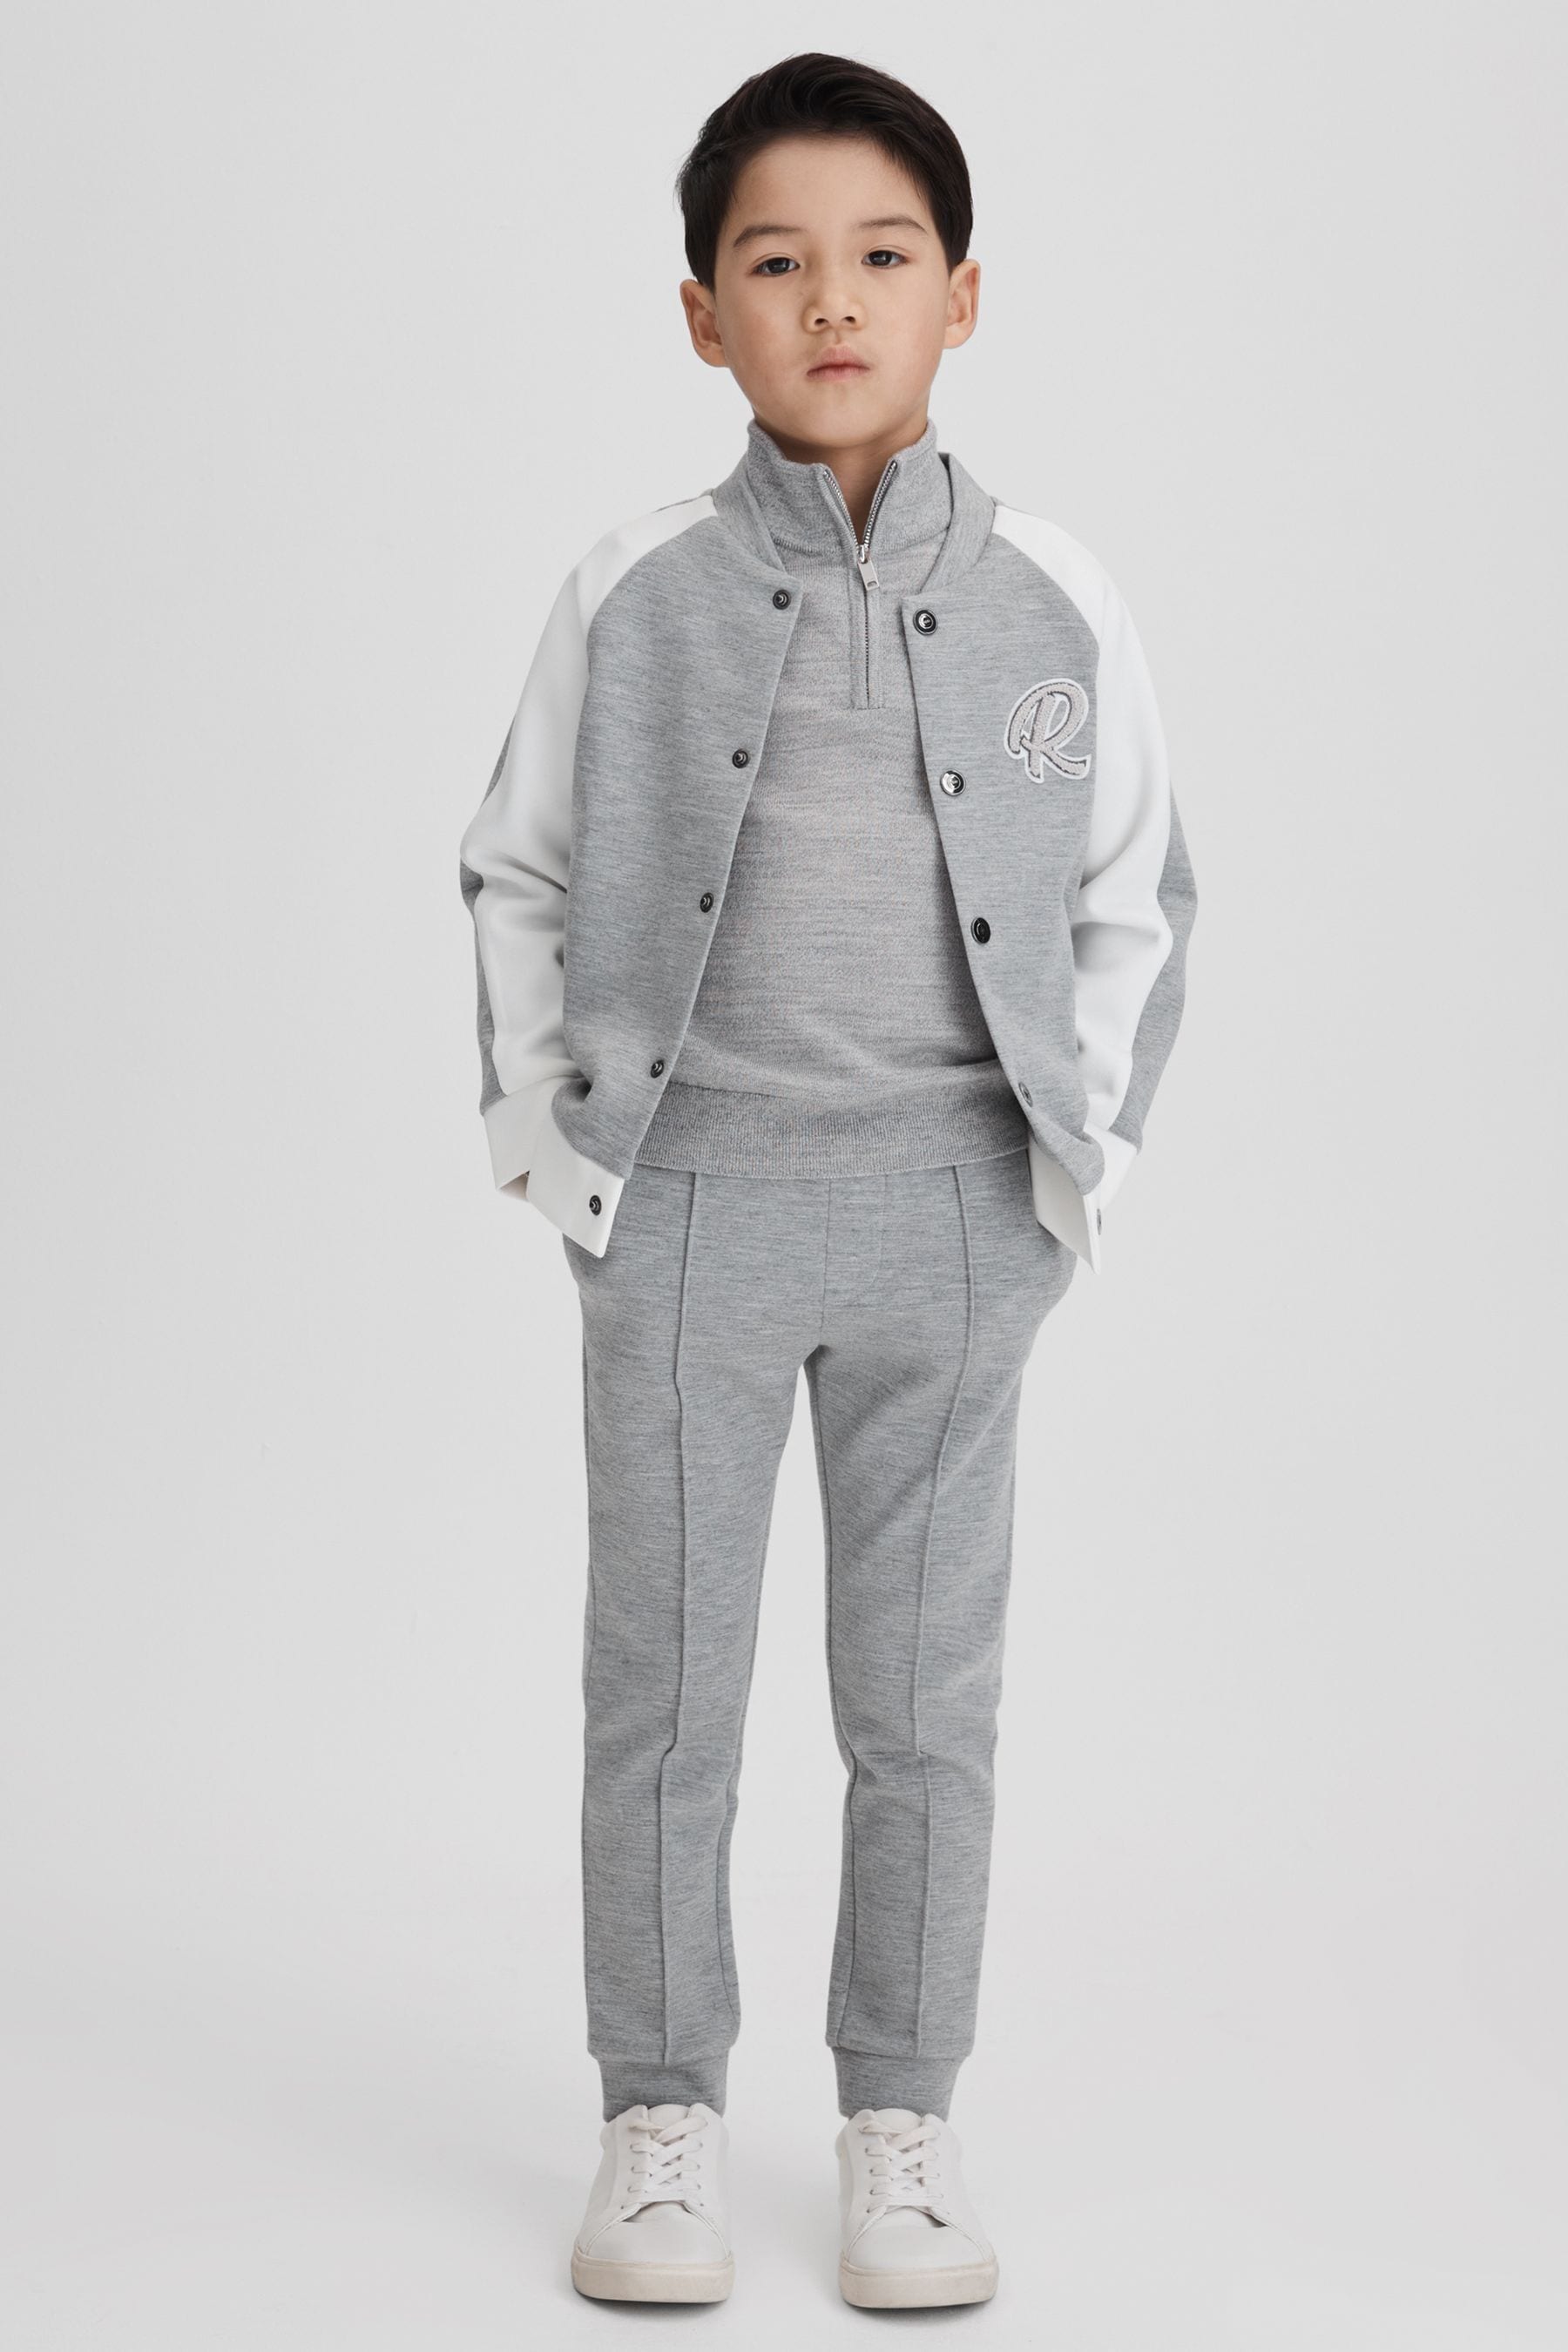 Reiss Pelham - Soft Grey/white Junior Jersey Varsity Jacket, Age 8-9 Years